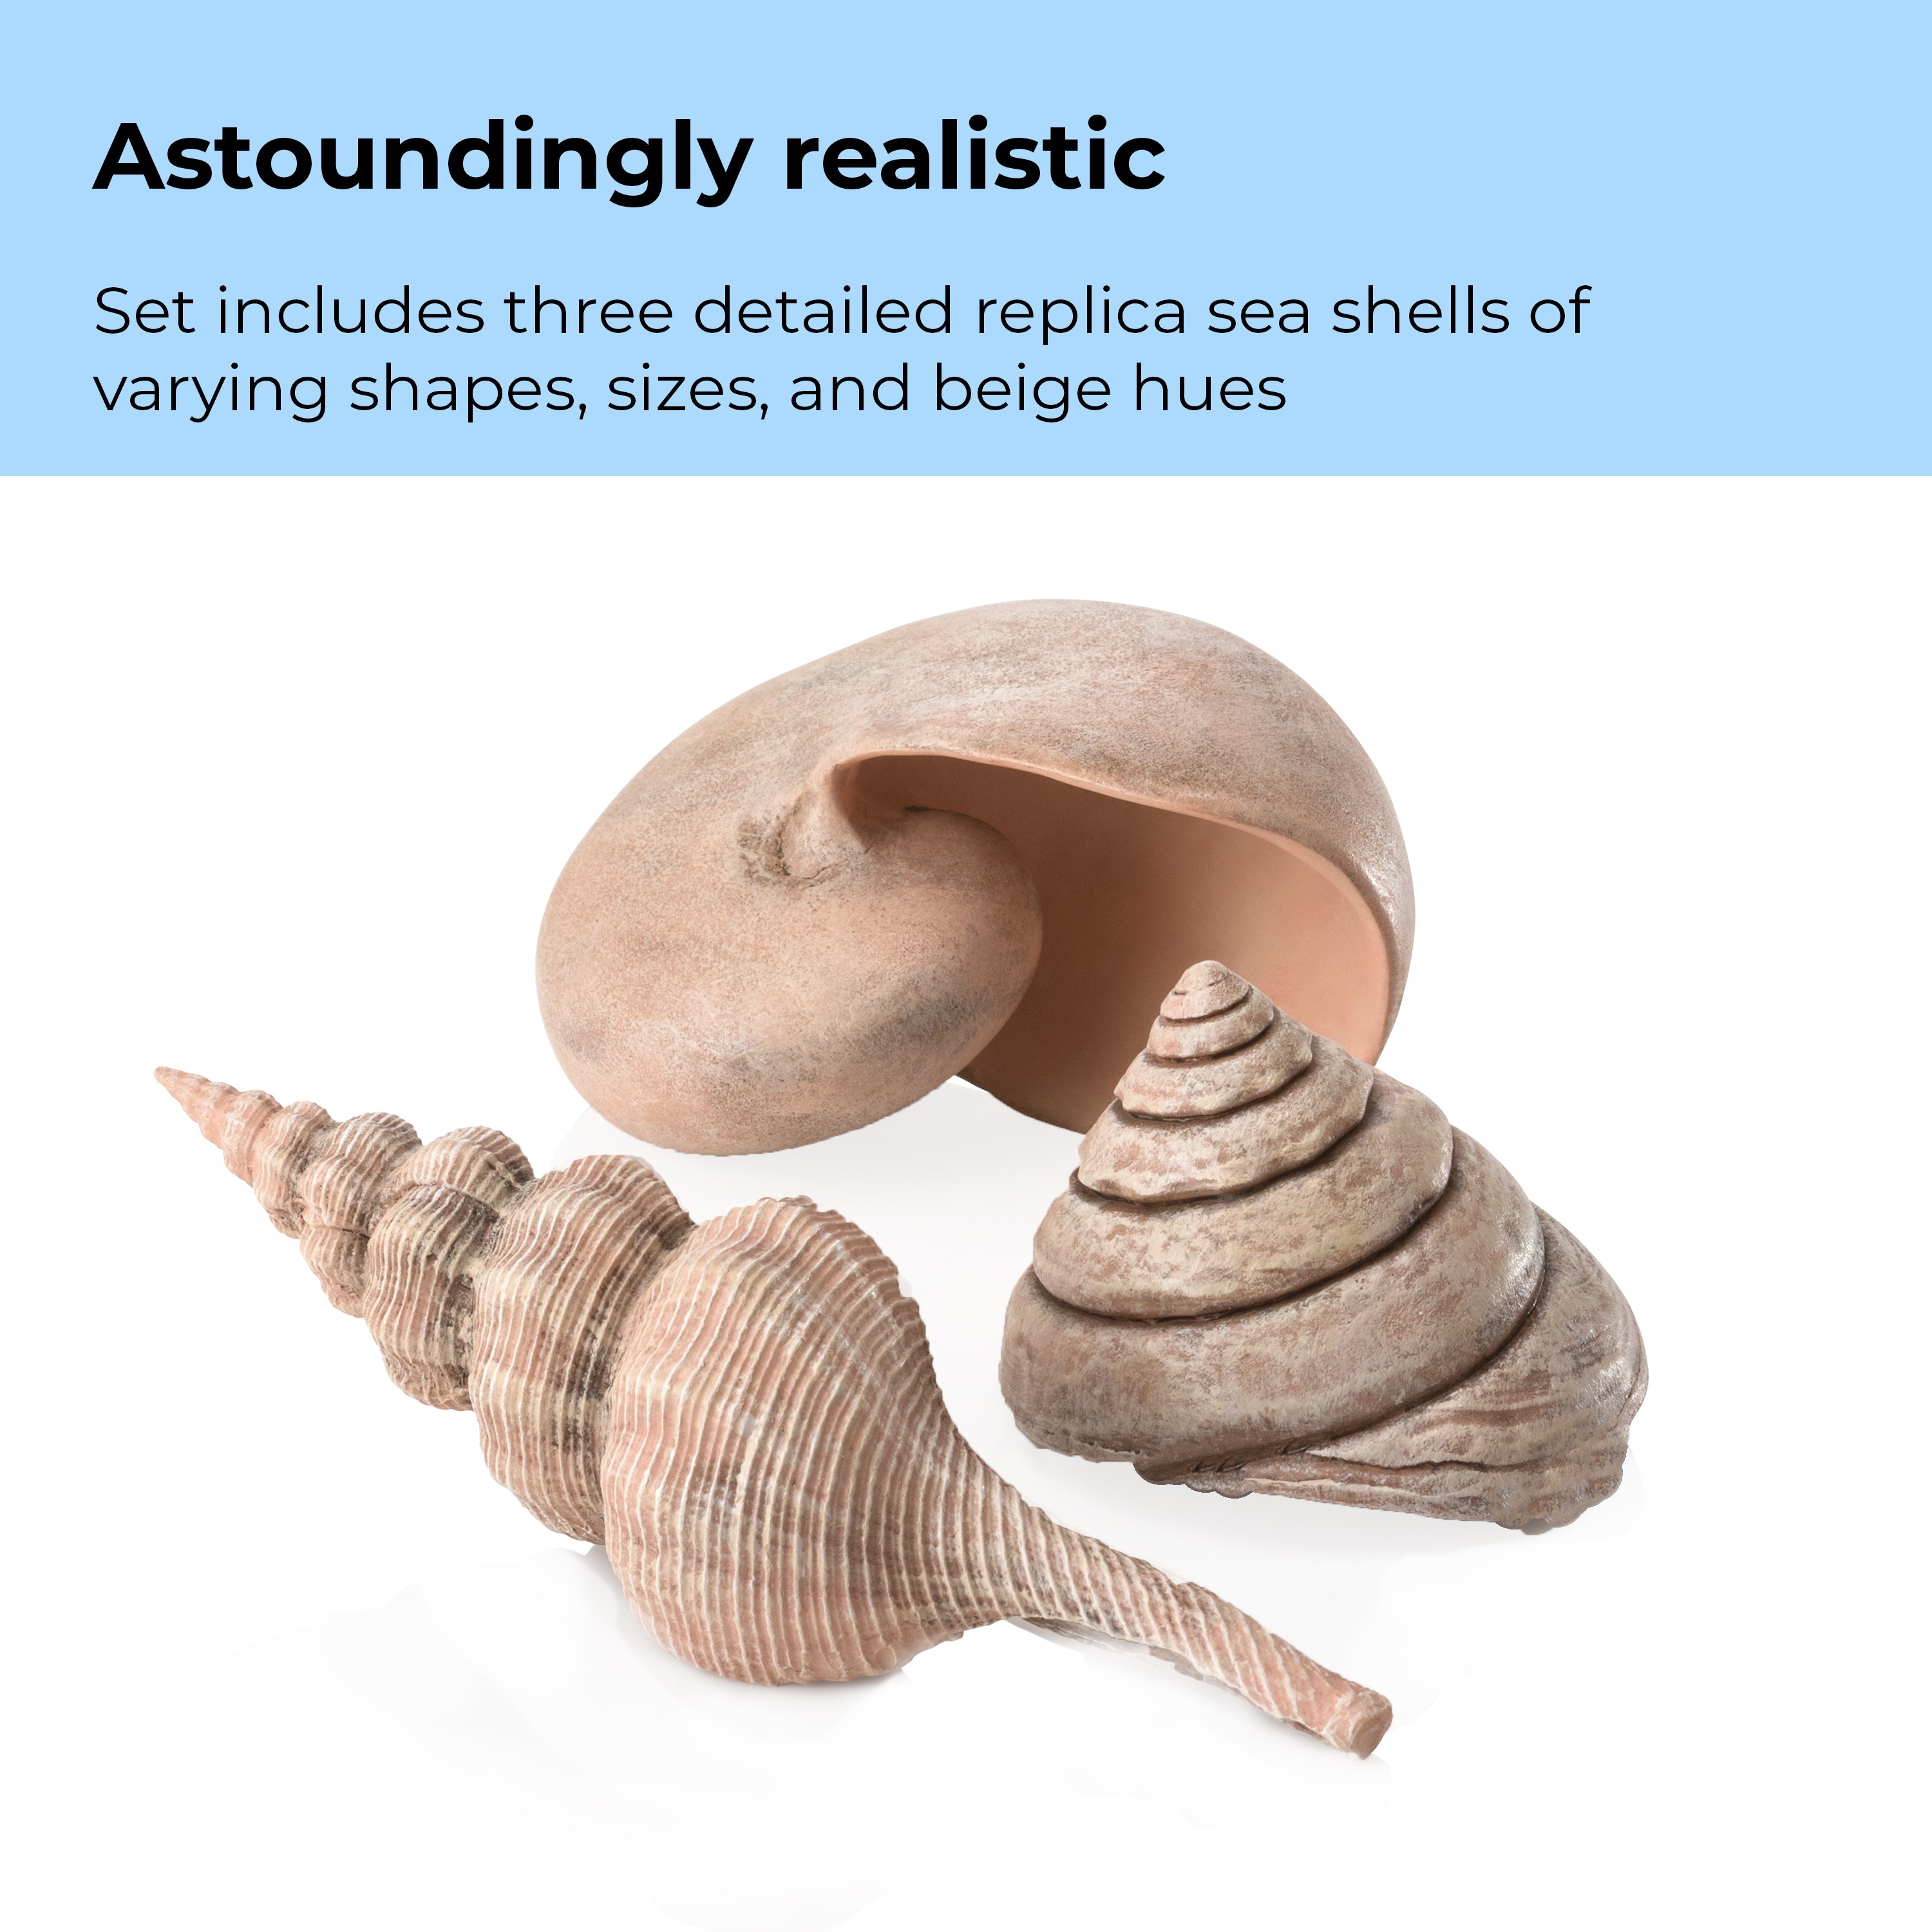 Sea Shell Set - Astoundingly realistic